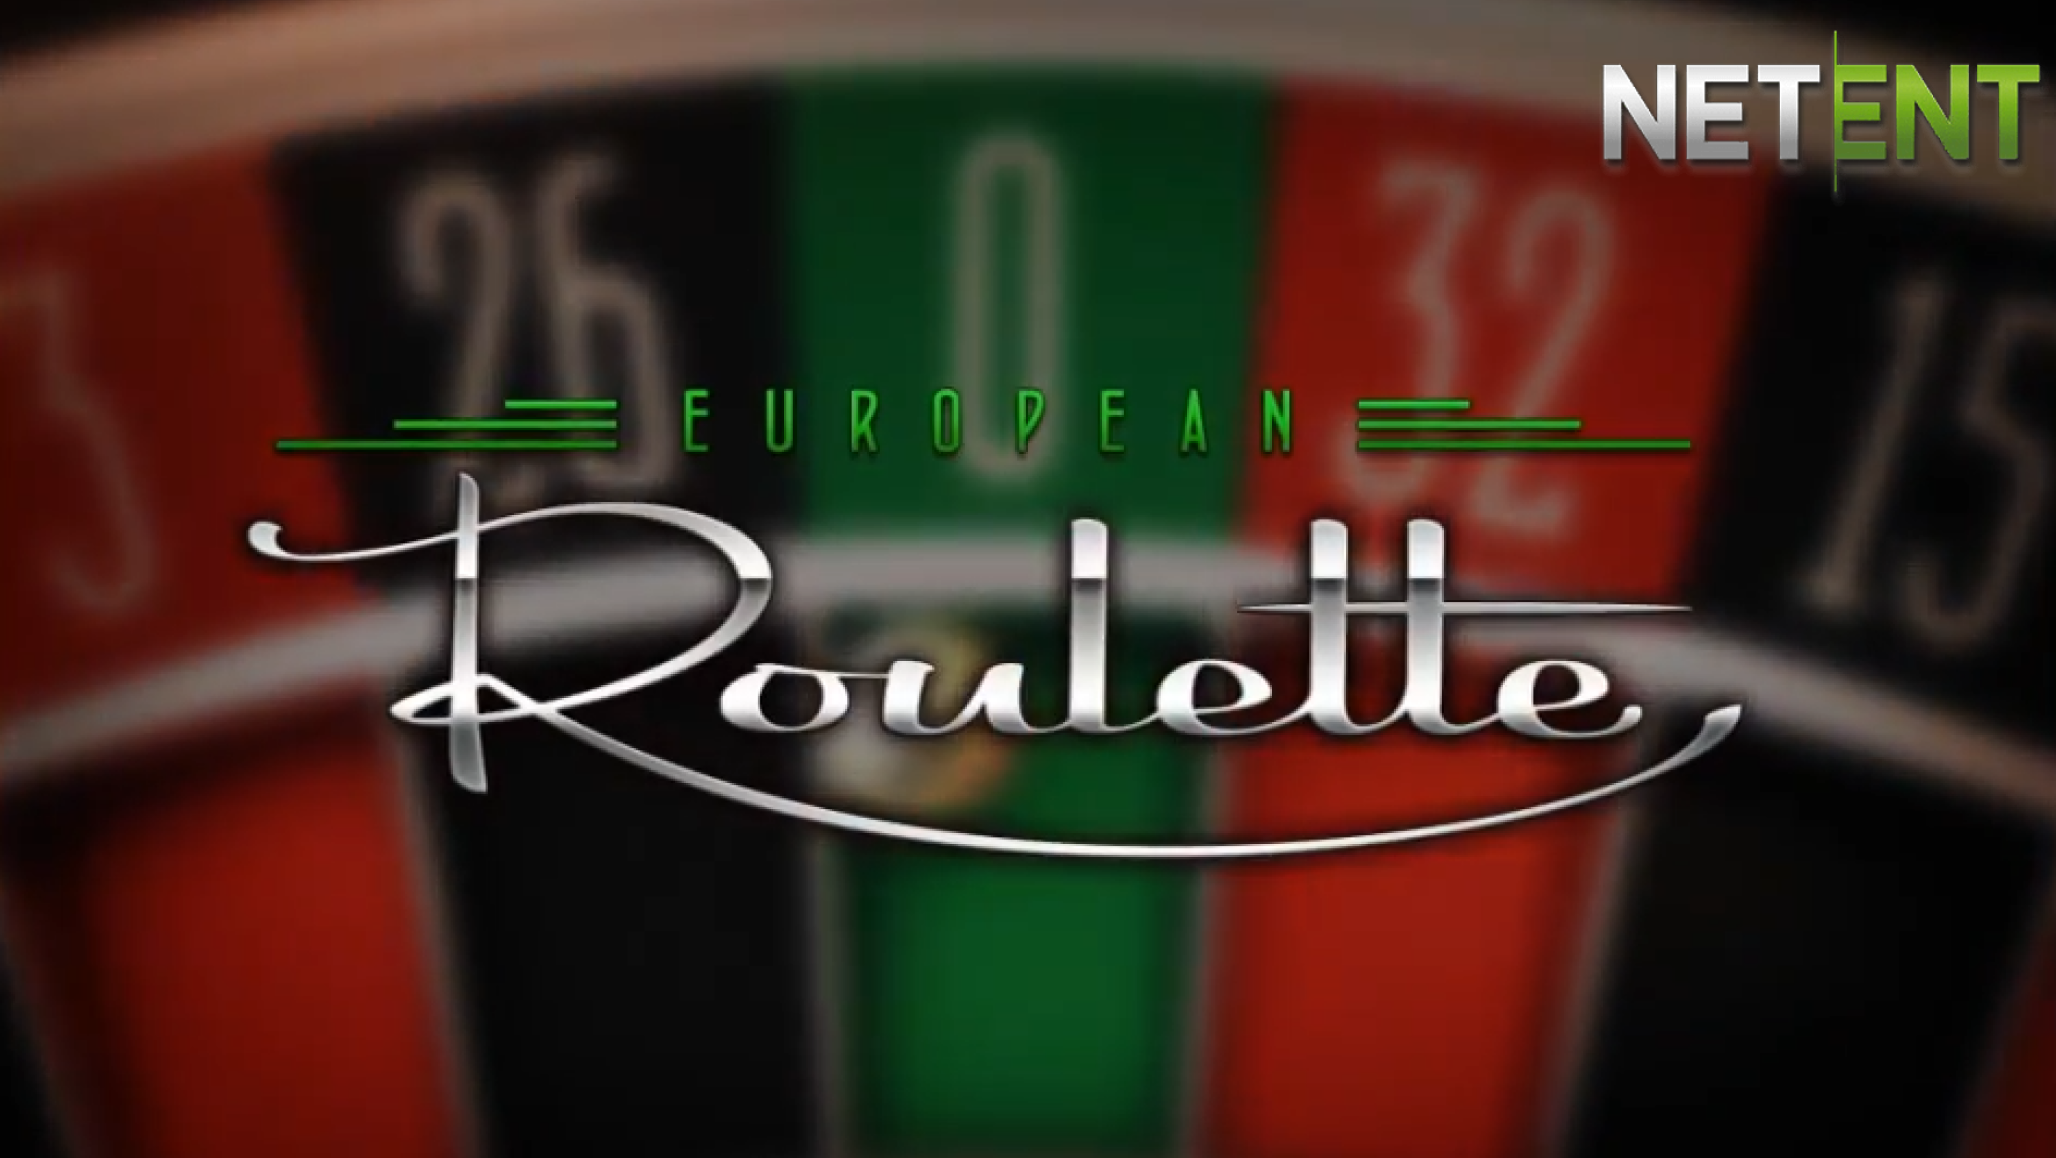 NetEnt ist European Roulette